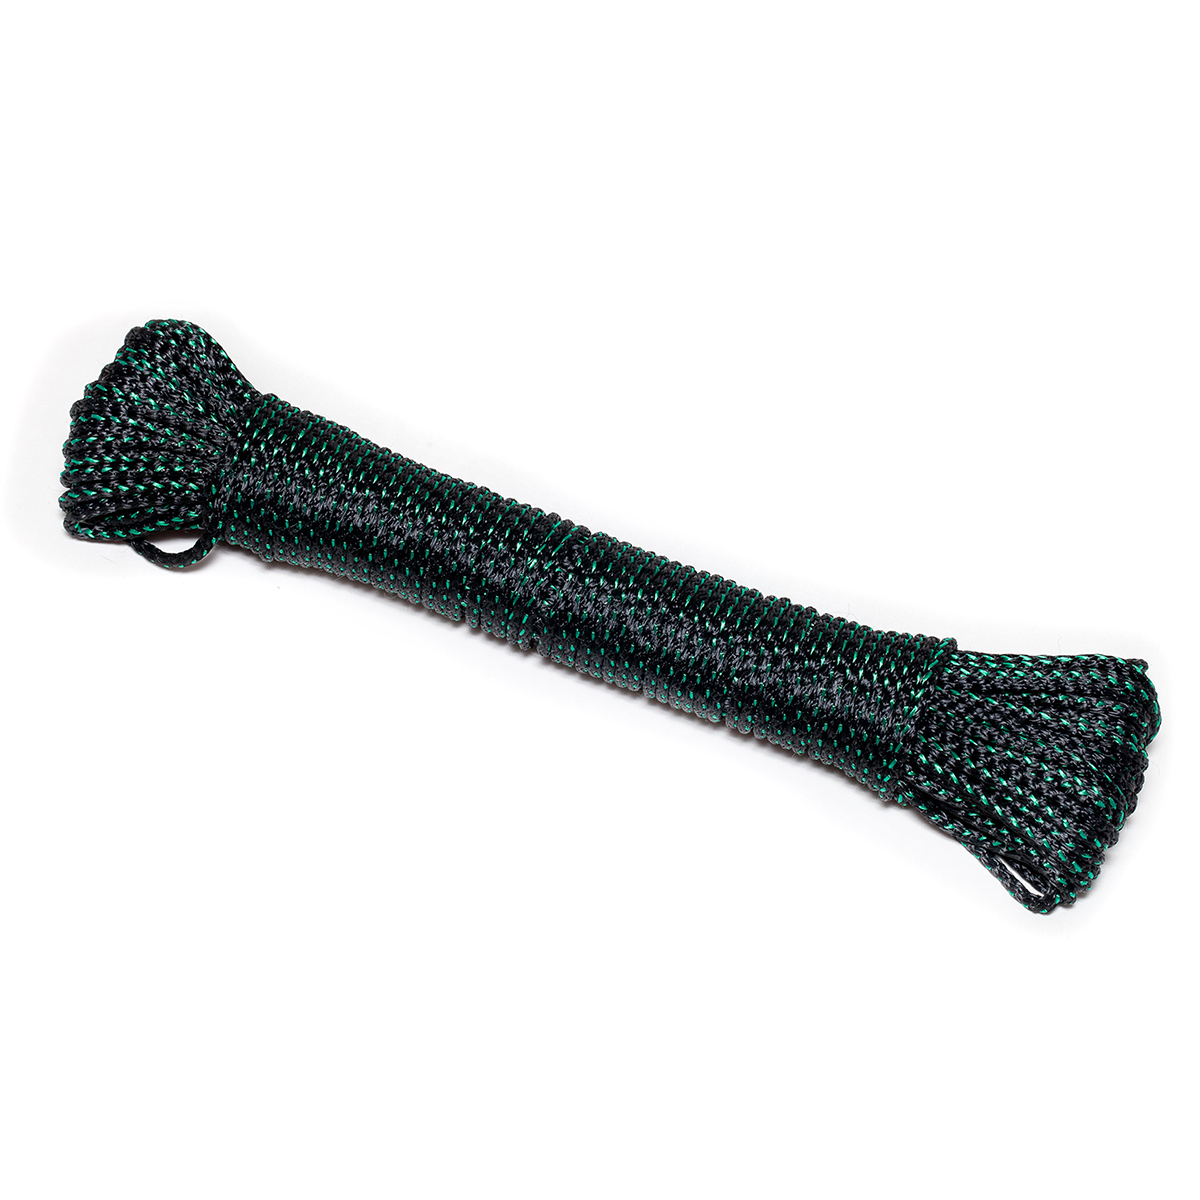 Шнур утяжеляющий Петроканат, 31 м, черно-зеленый, вес 22 г/м шнур для вязания 100% полиэфир ширина 4 мм 50м джинс